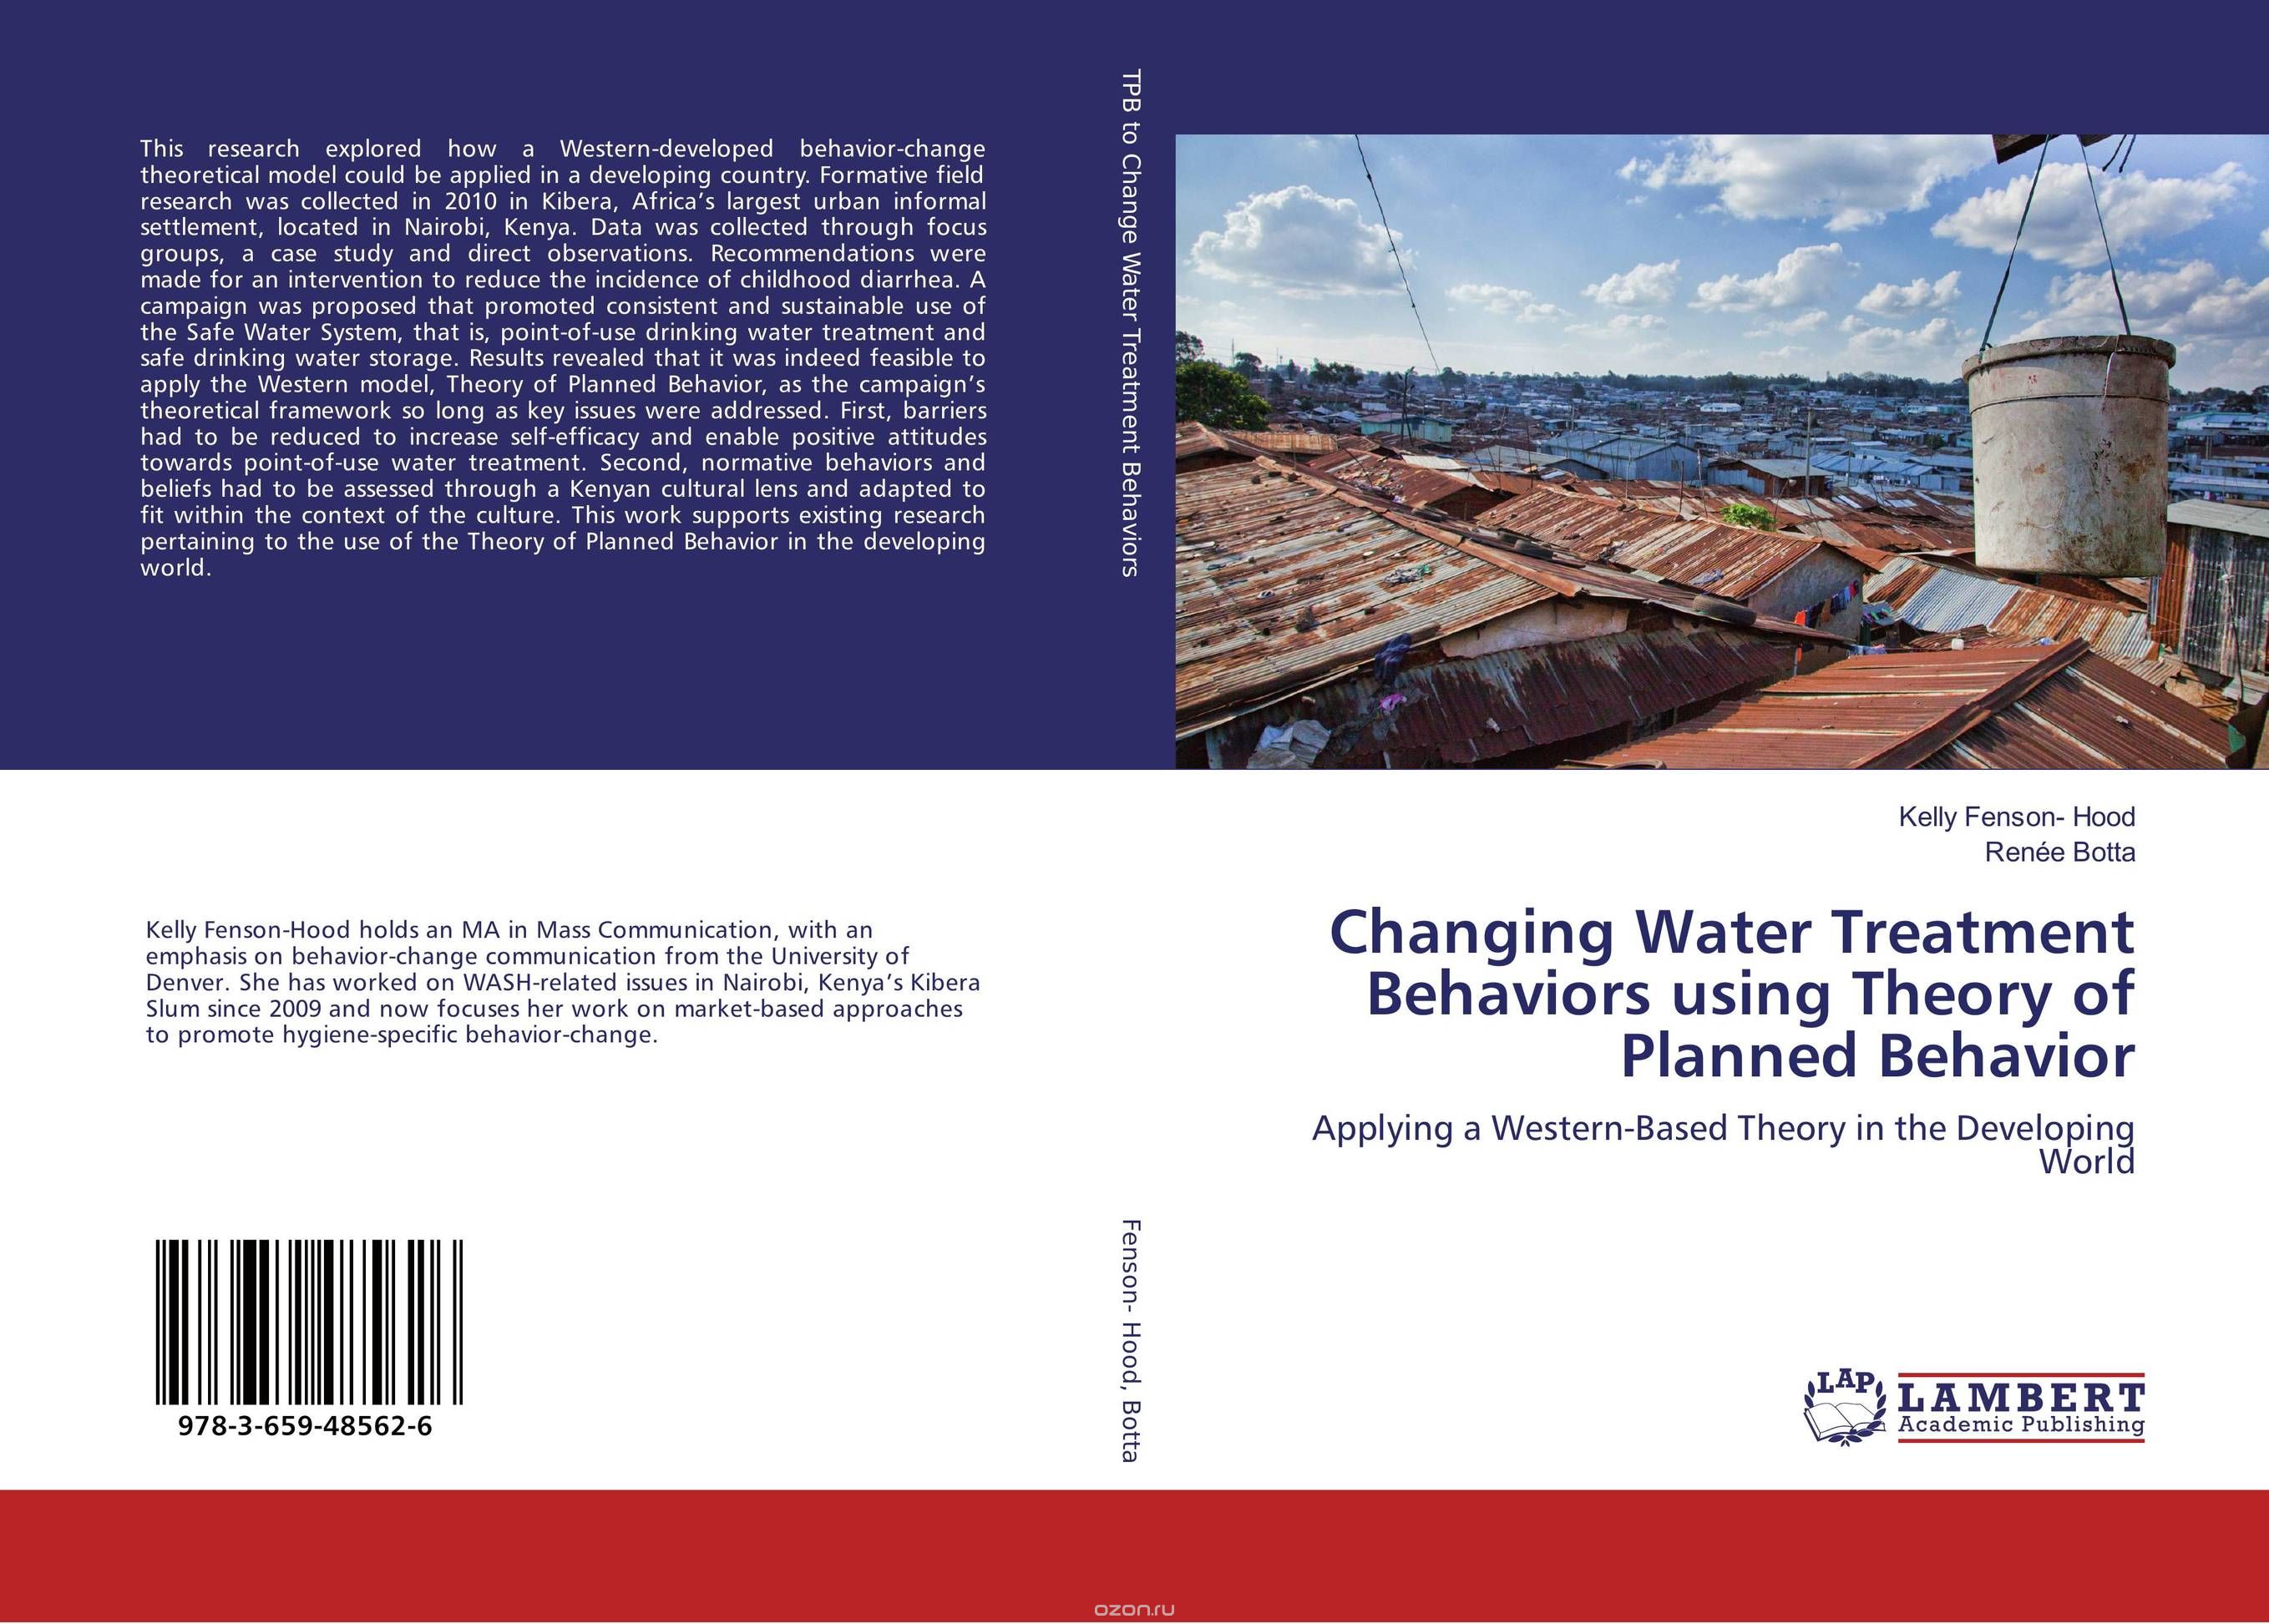 Скачать книгу "Changing Water Treatment Behaviors using Theory of Planned Behavior"